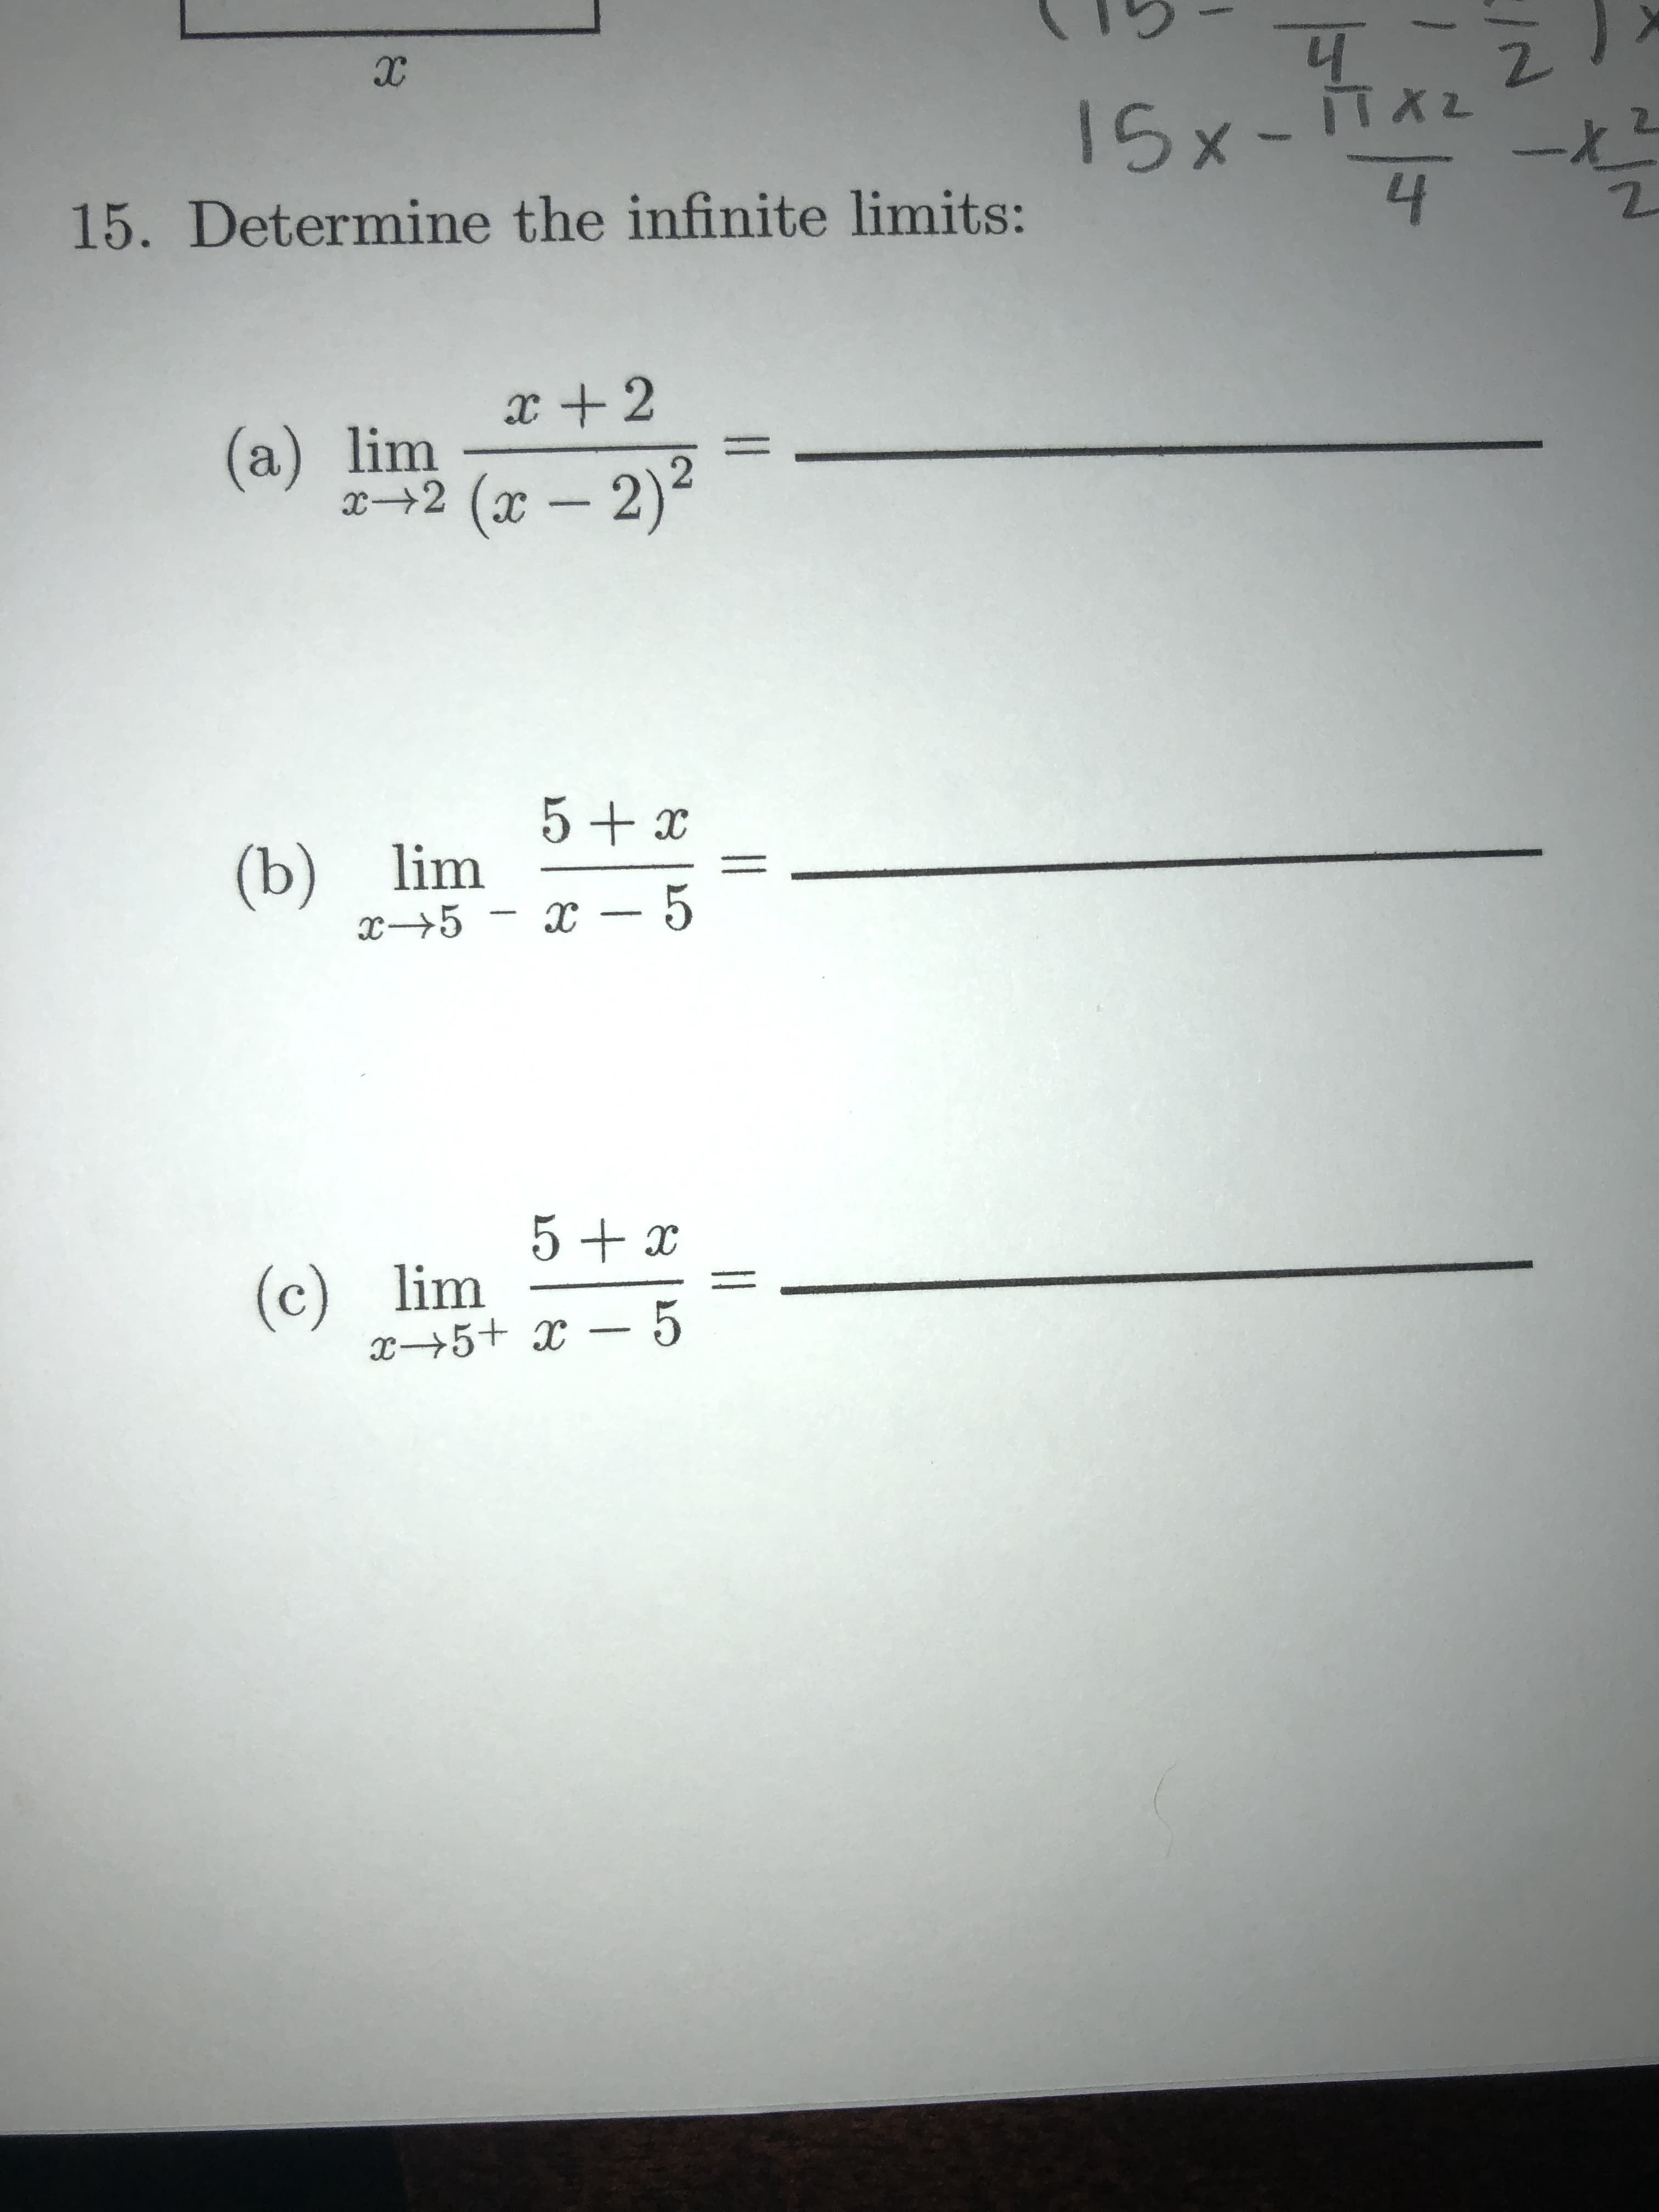 15. Determine the infinite limits:
x +2
(a) lim
x→2
+2 (x-2)
5+ x
(b) lim
x→5 - x – 5
5+ x
(c) lim
(c)
x→5+ x – 5
